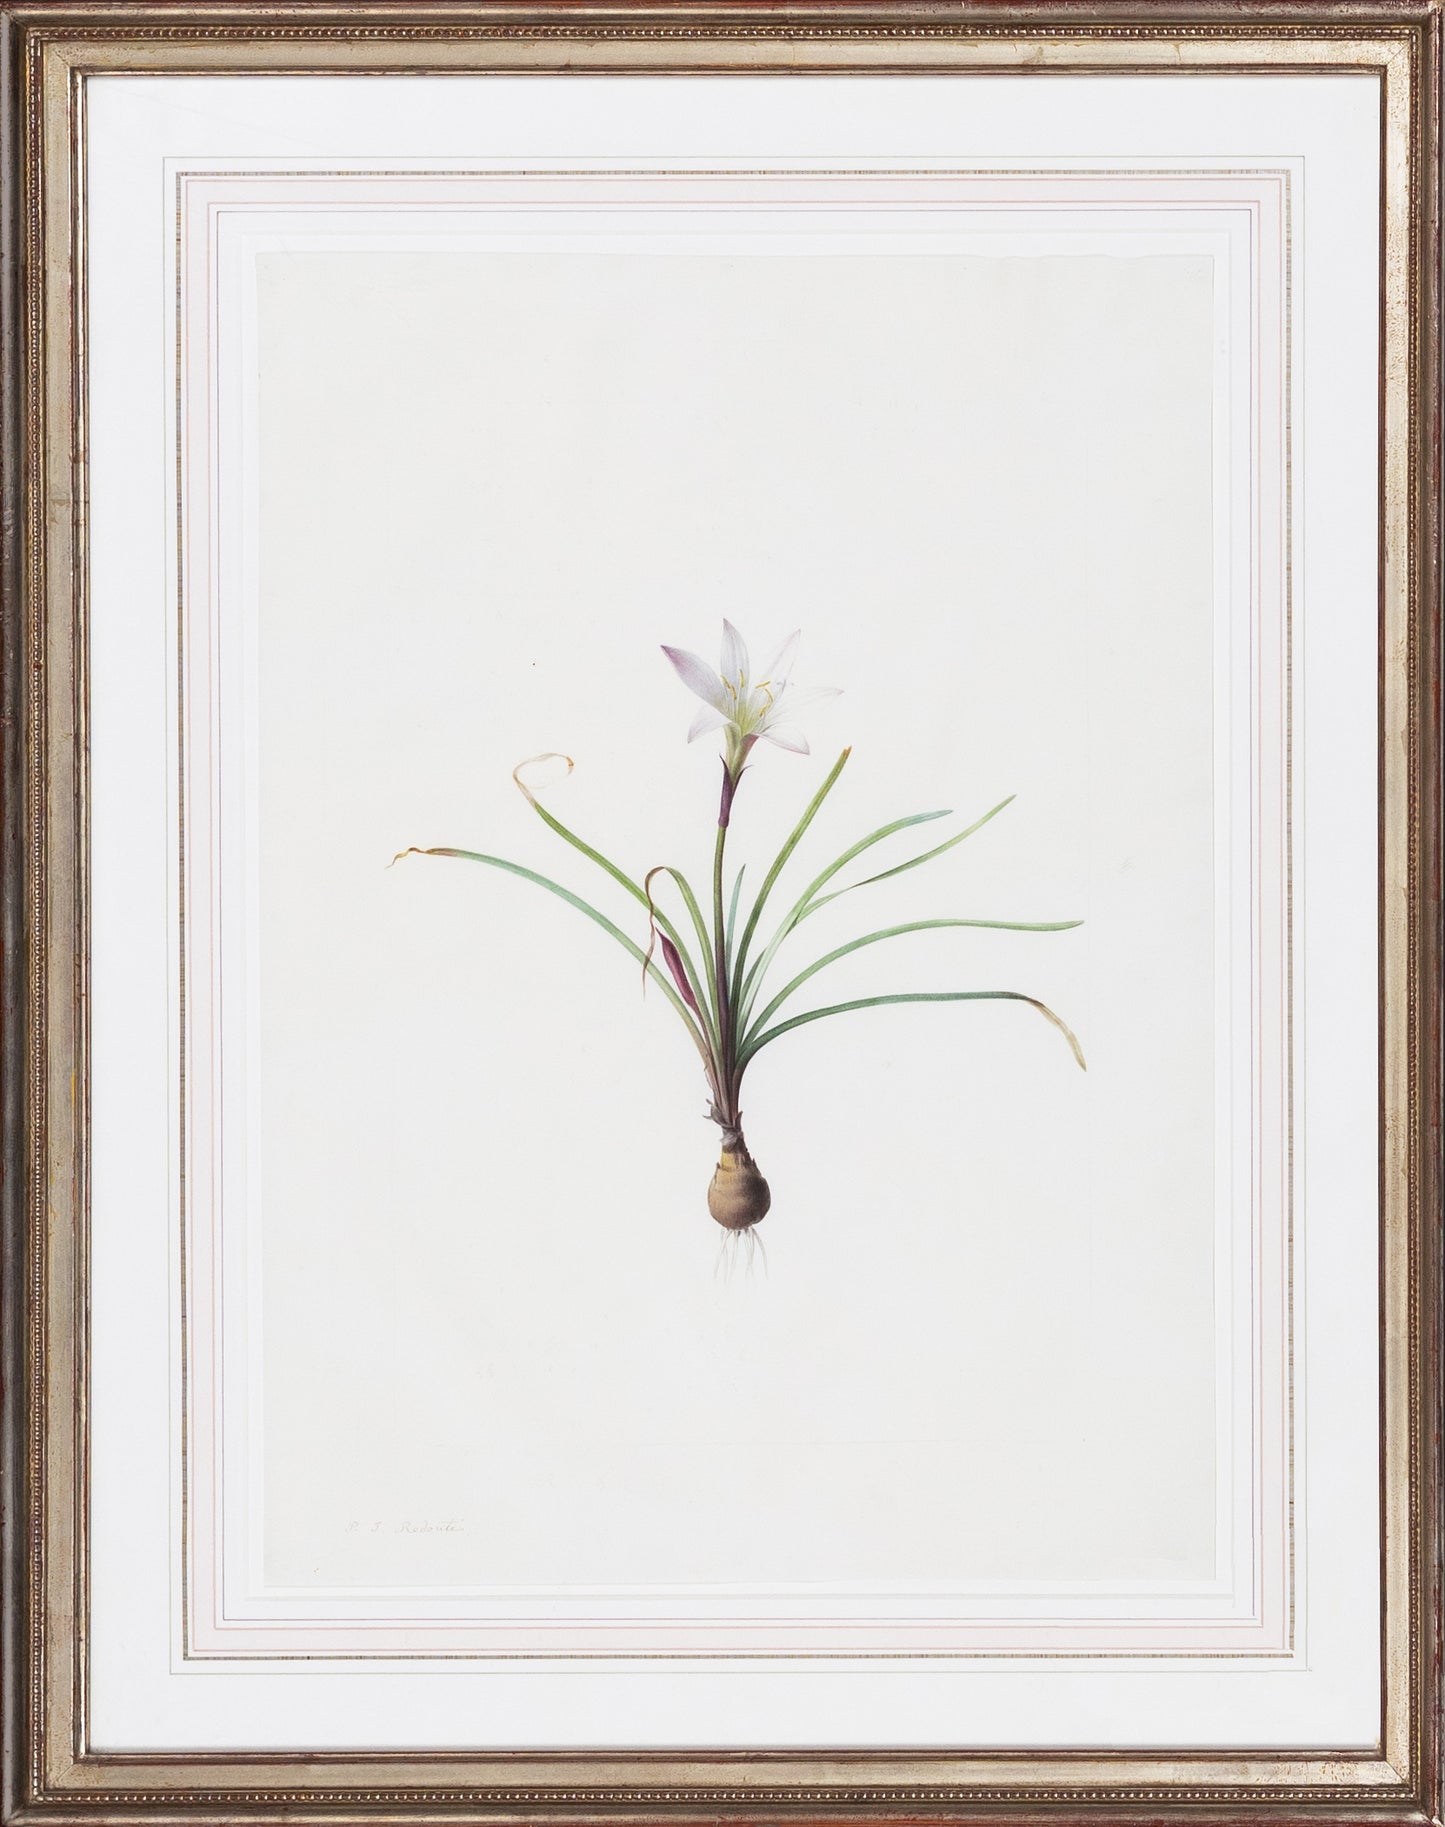 Redouté, Pierre-Joseph. "Fair Lily or Amarylis of Virginia". Prepared for Les Liliacées, ca. 1802-1816.